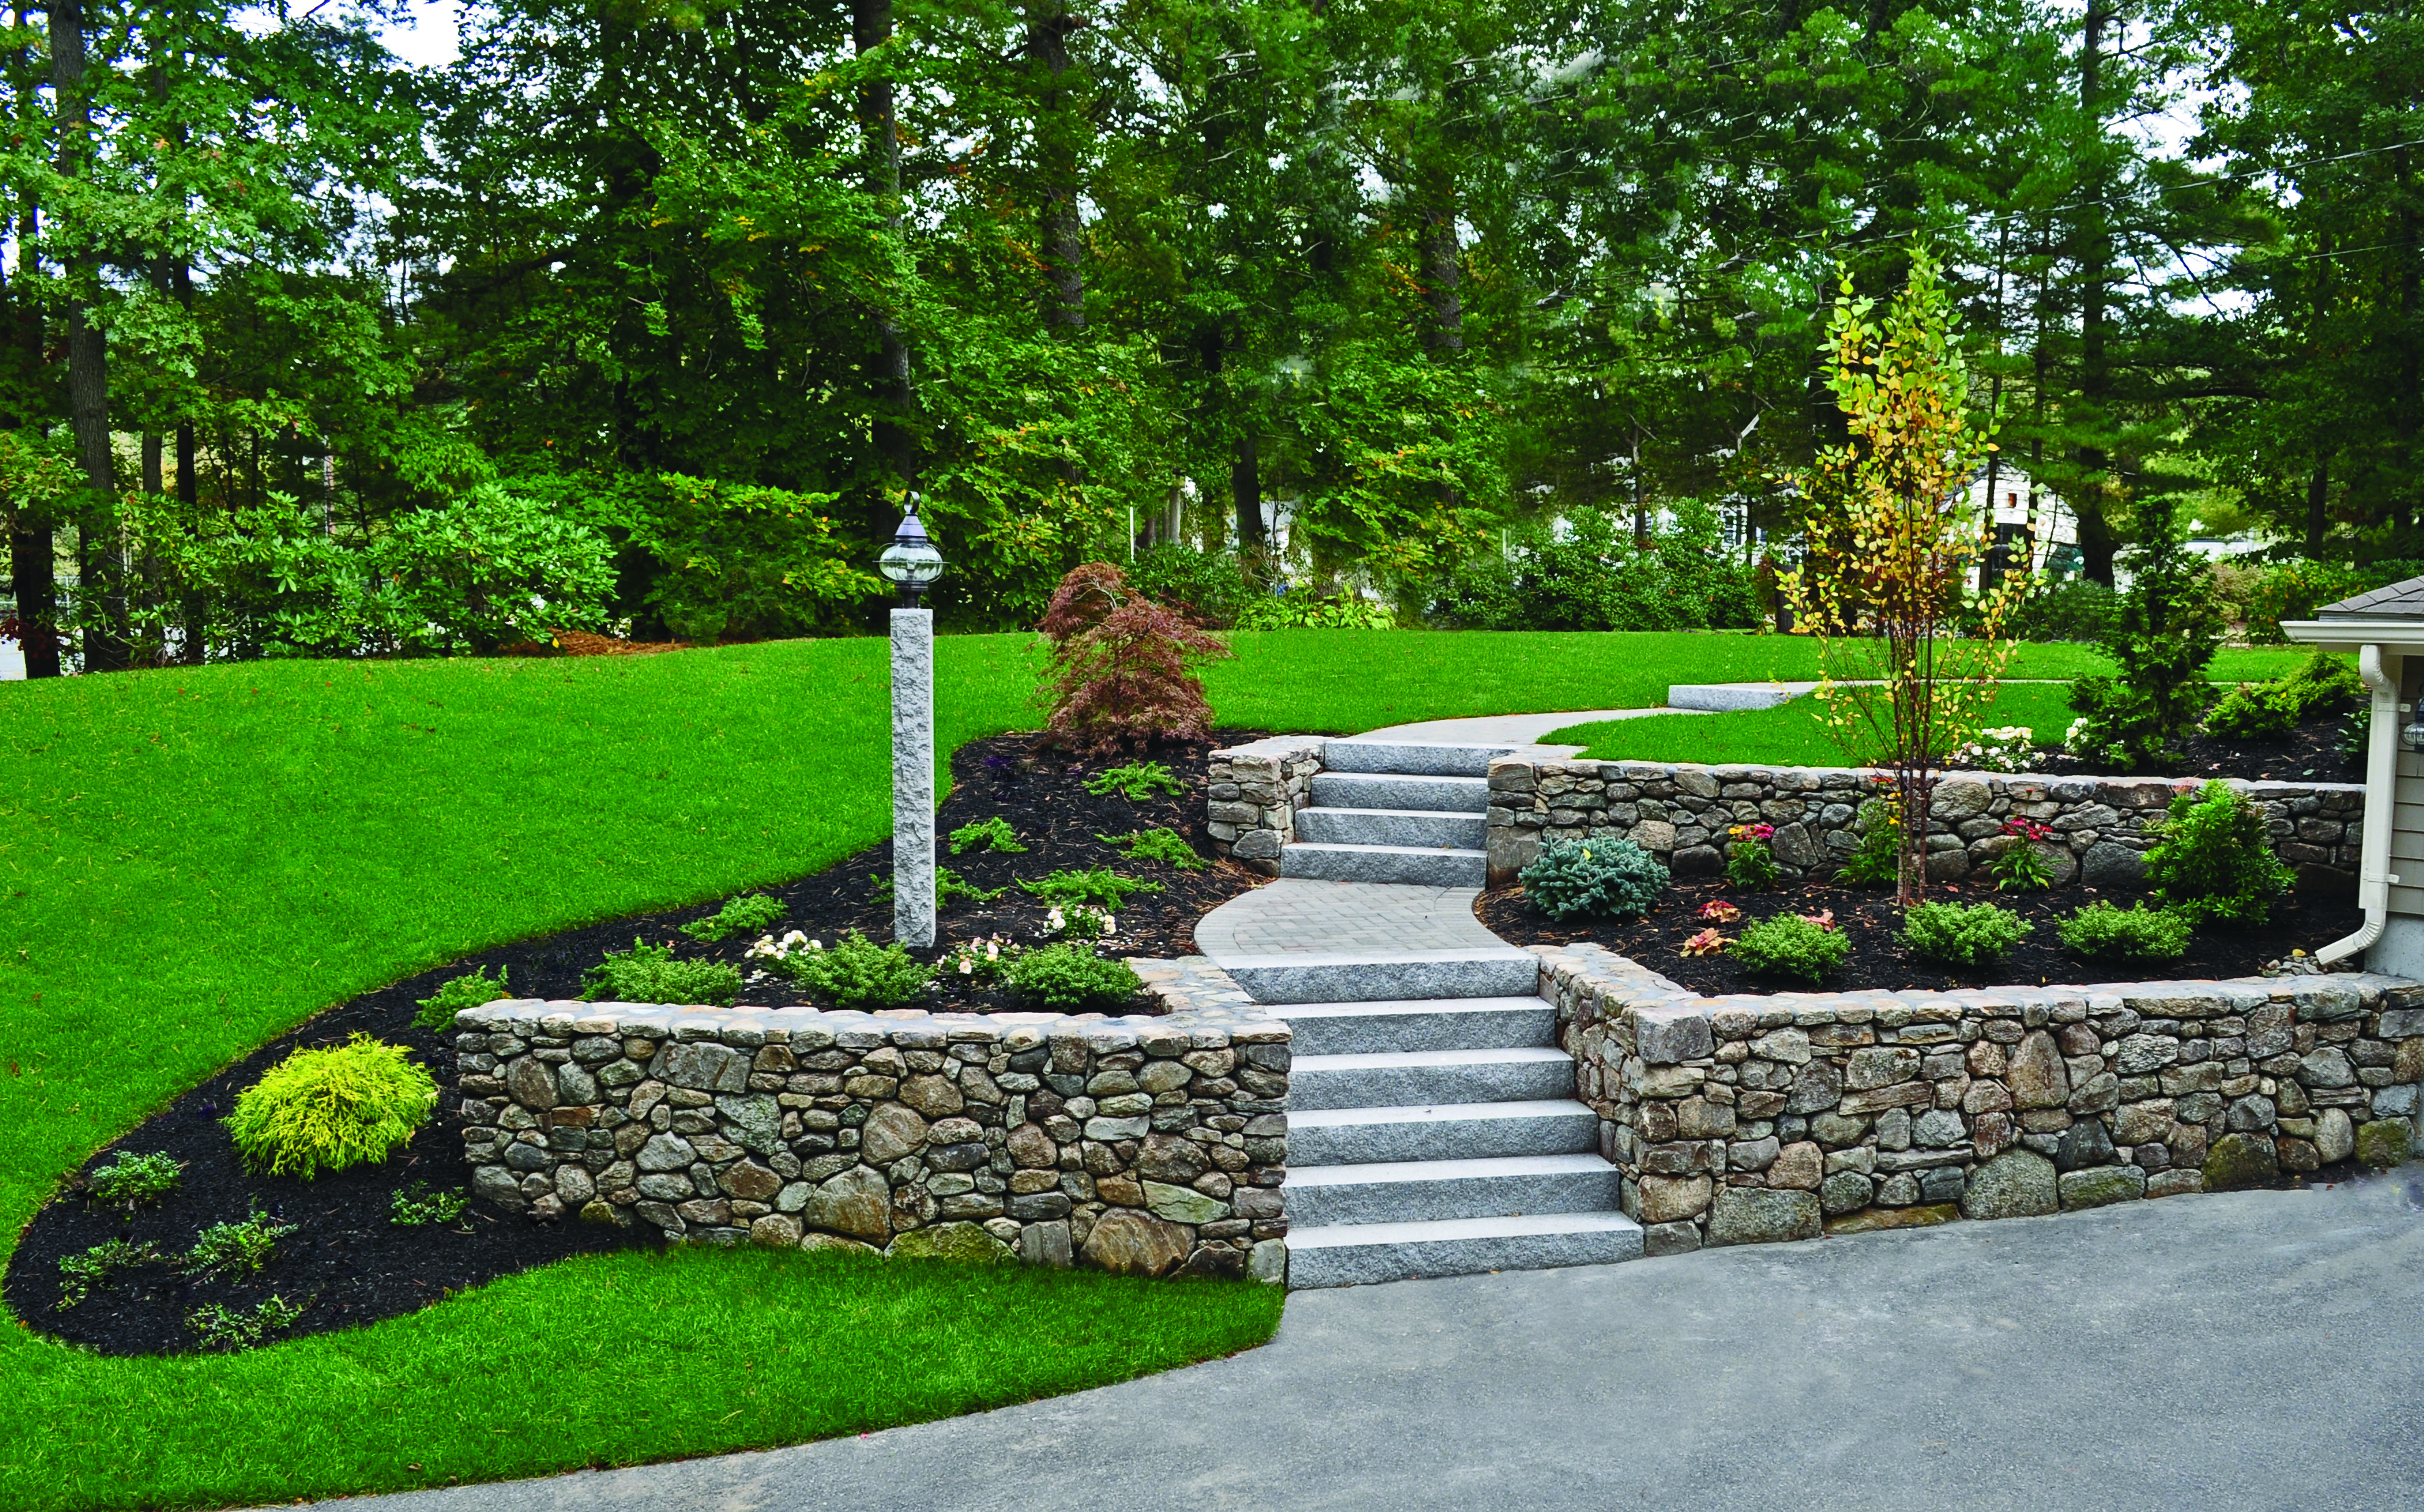 New England-style wallstone and Woodbury Gray granite steps